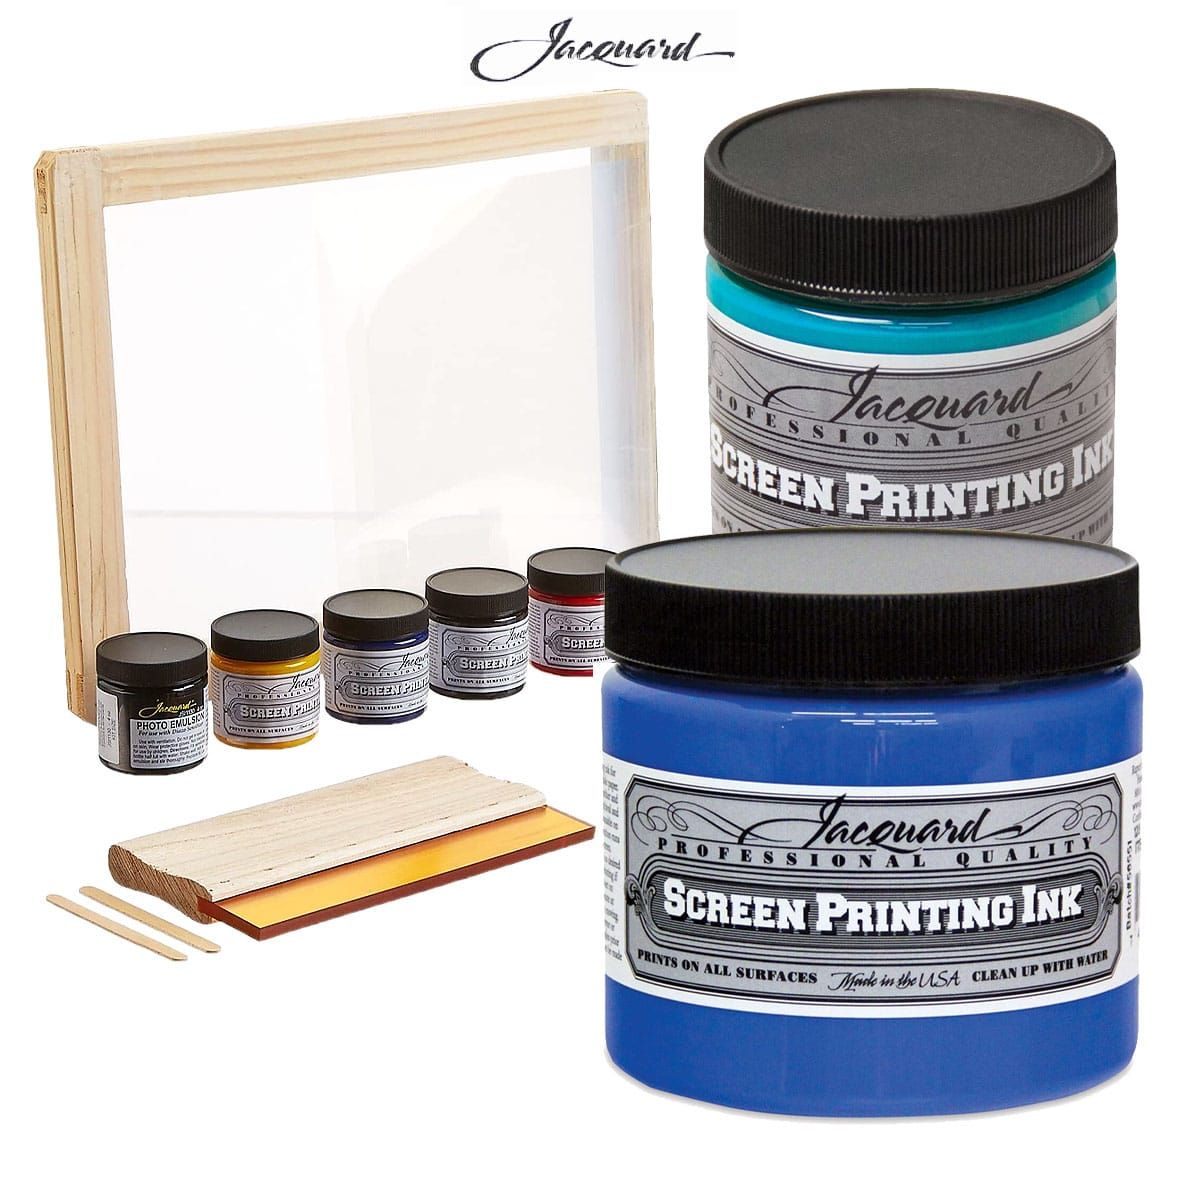 Jacquard Screen Printing Inks & Kits